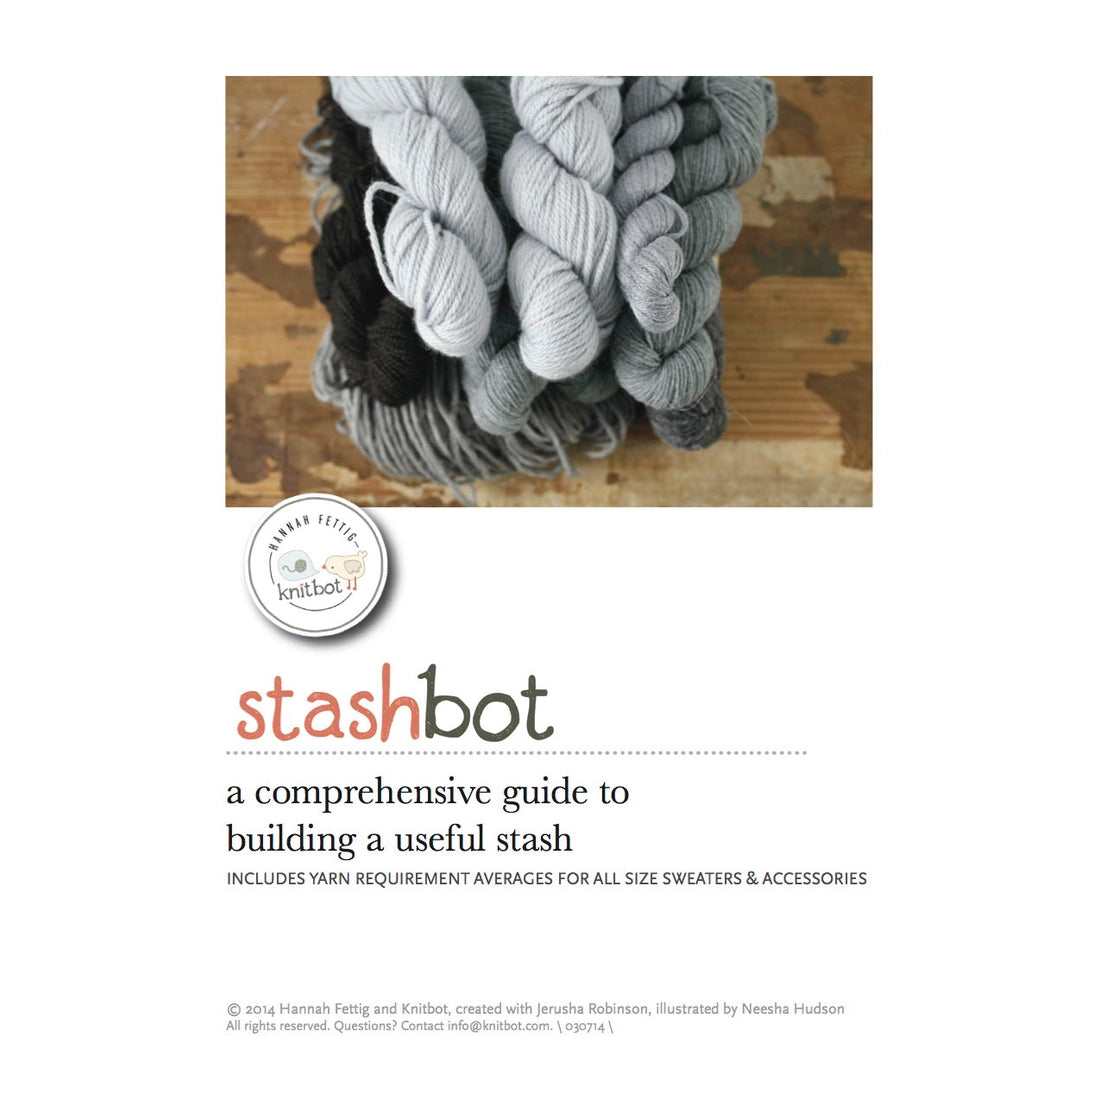 Stashbot: A Comprehensive Guide to Building a Useful Stash